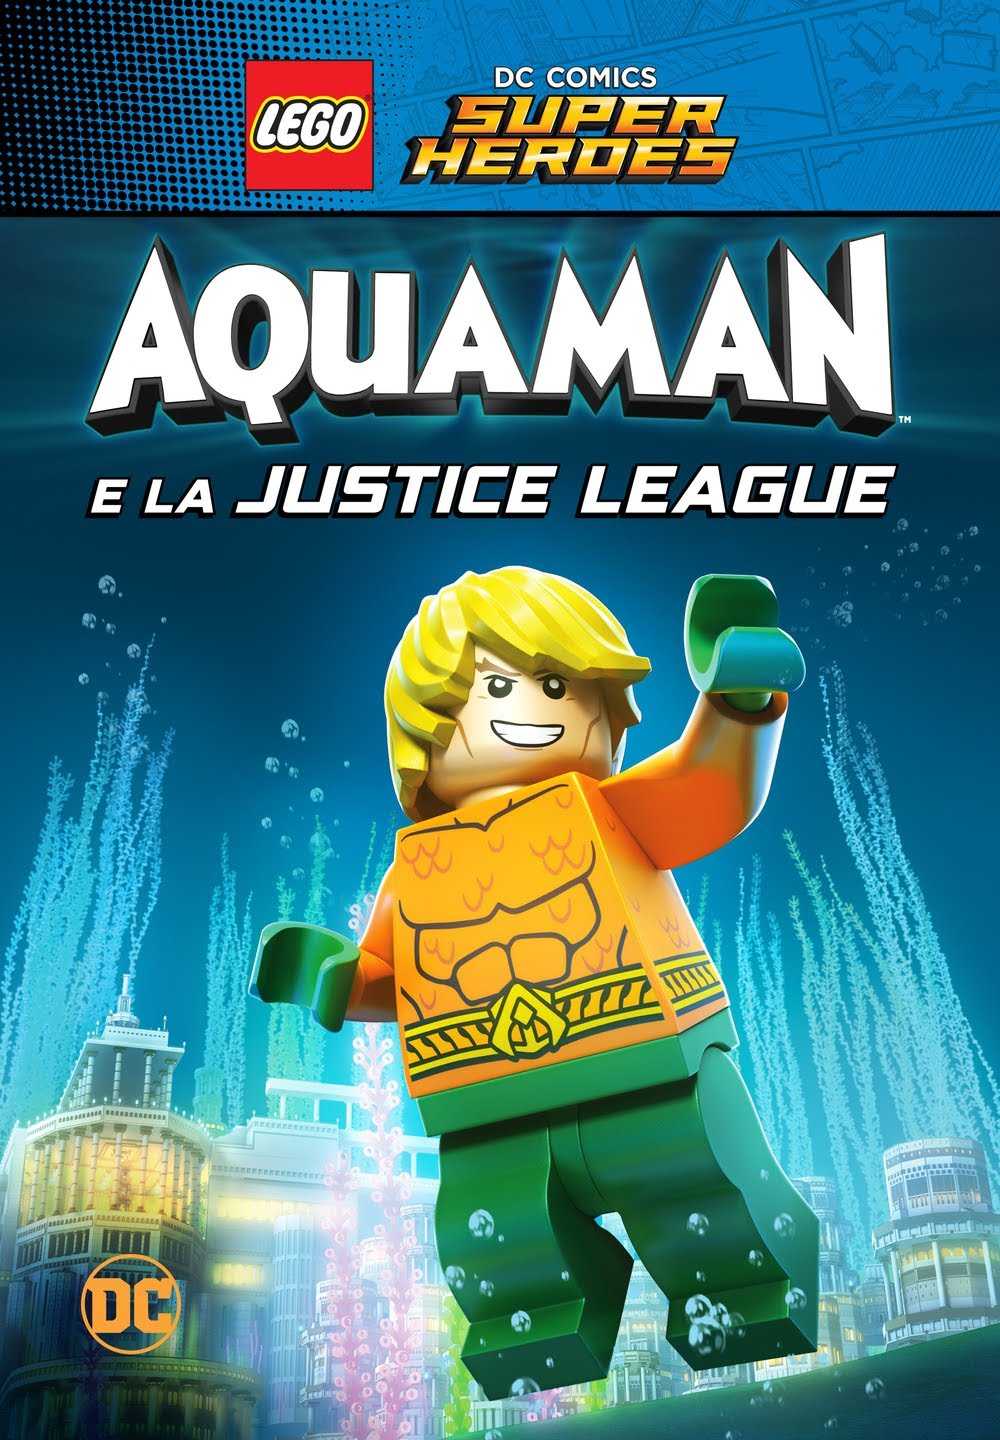 LEGO DC Super Heroes- Aquaman e la Justice League in streaming